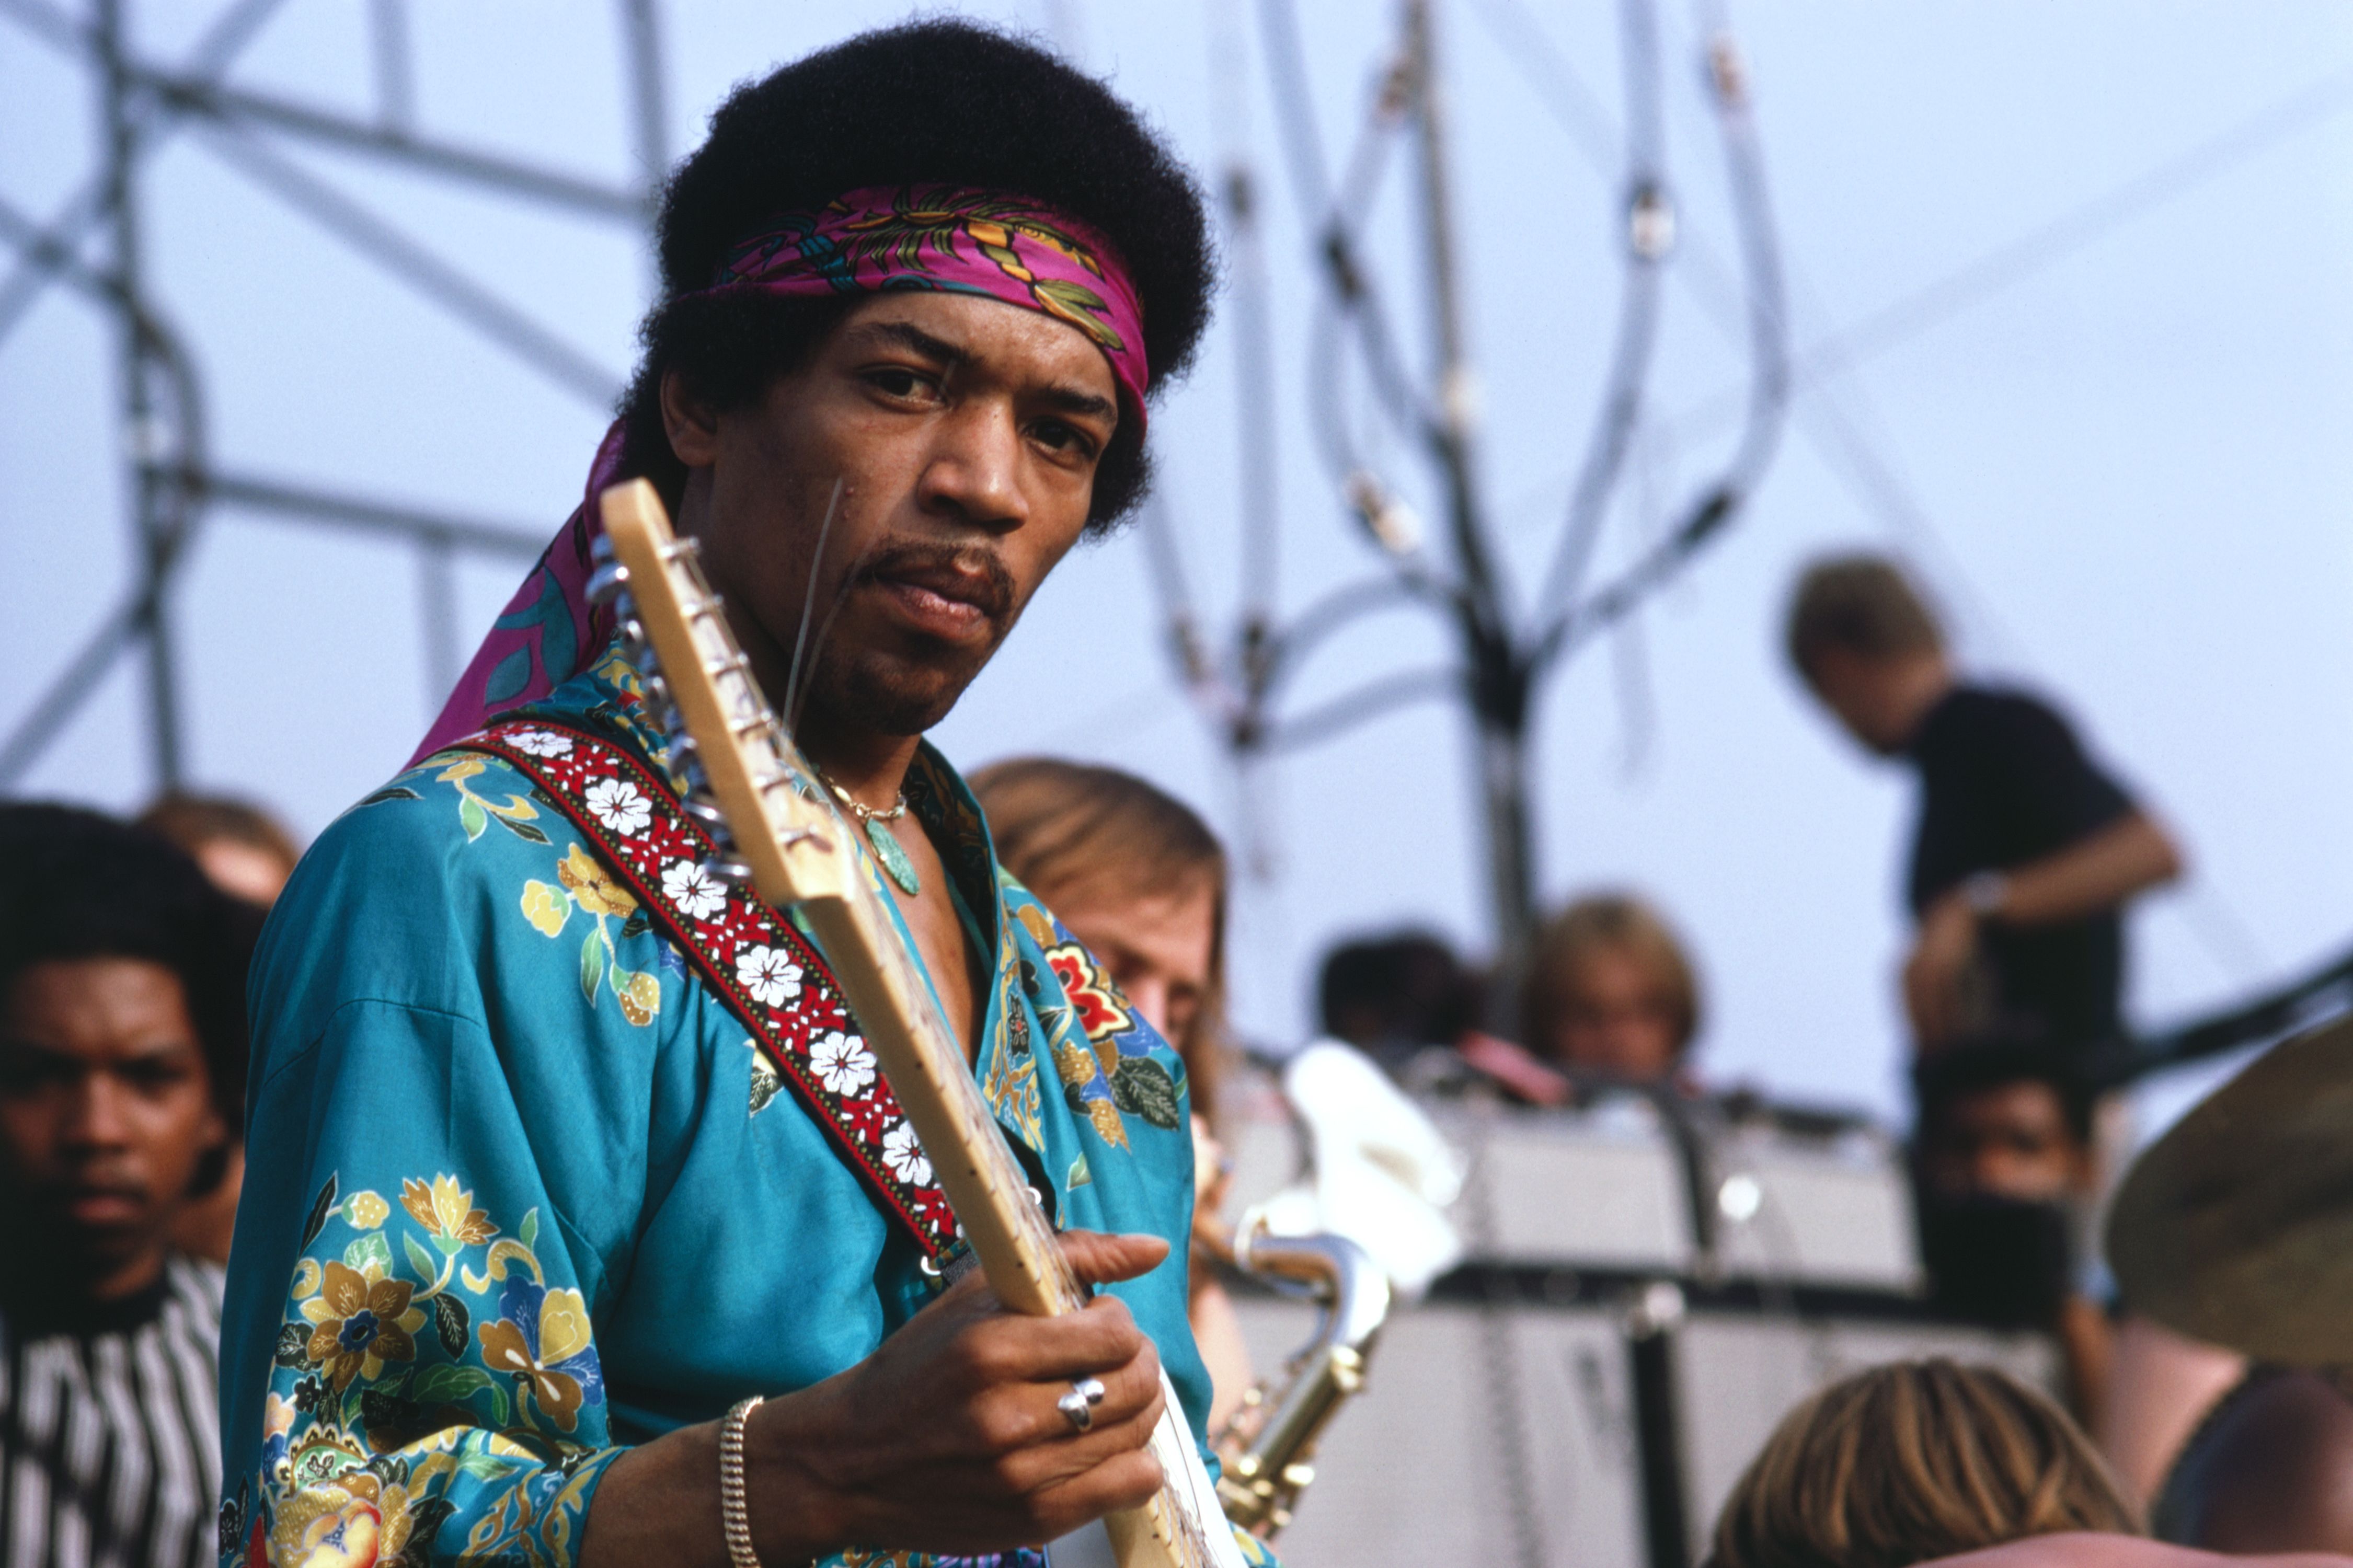 Unseen photos of Jimi Hendrix's greatest performances